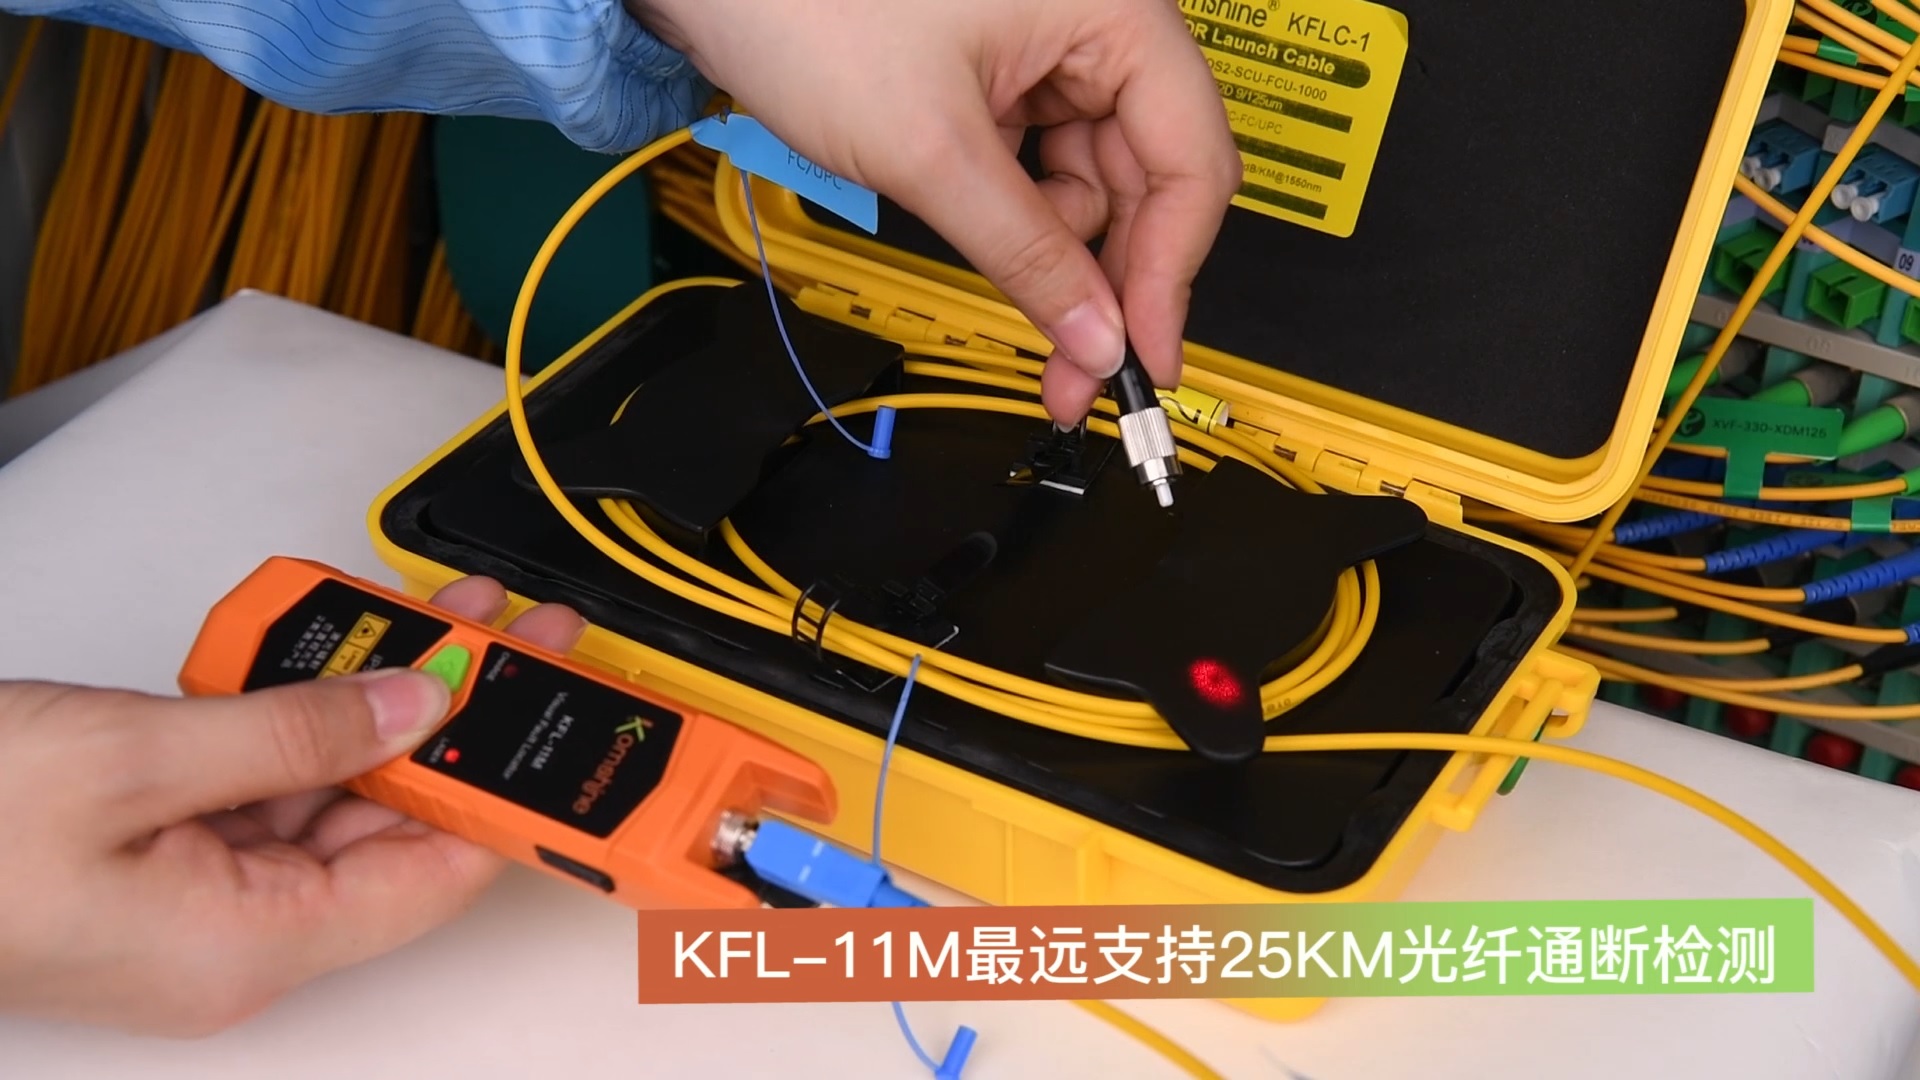 KFL-11M 迷你红光源视频教程 